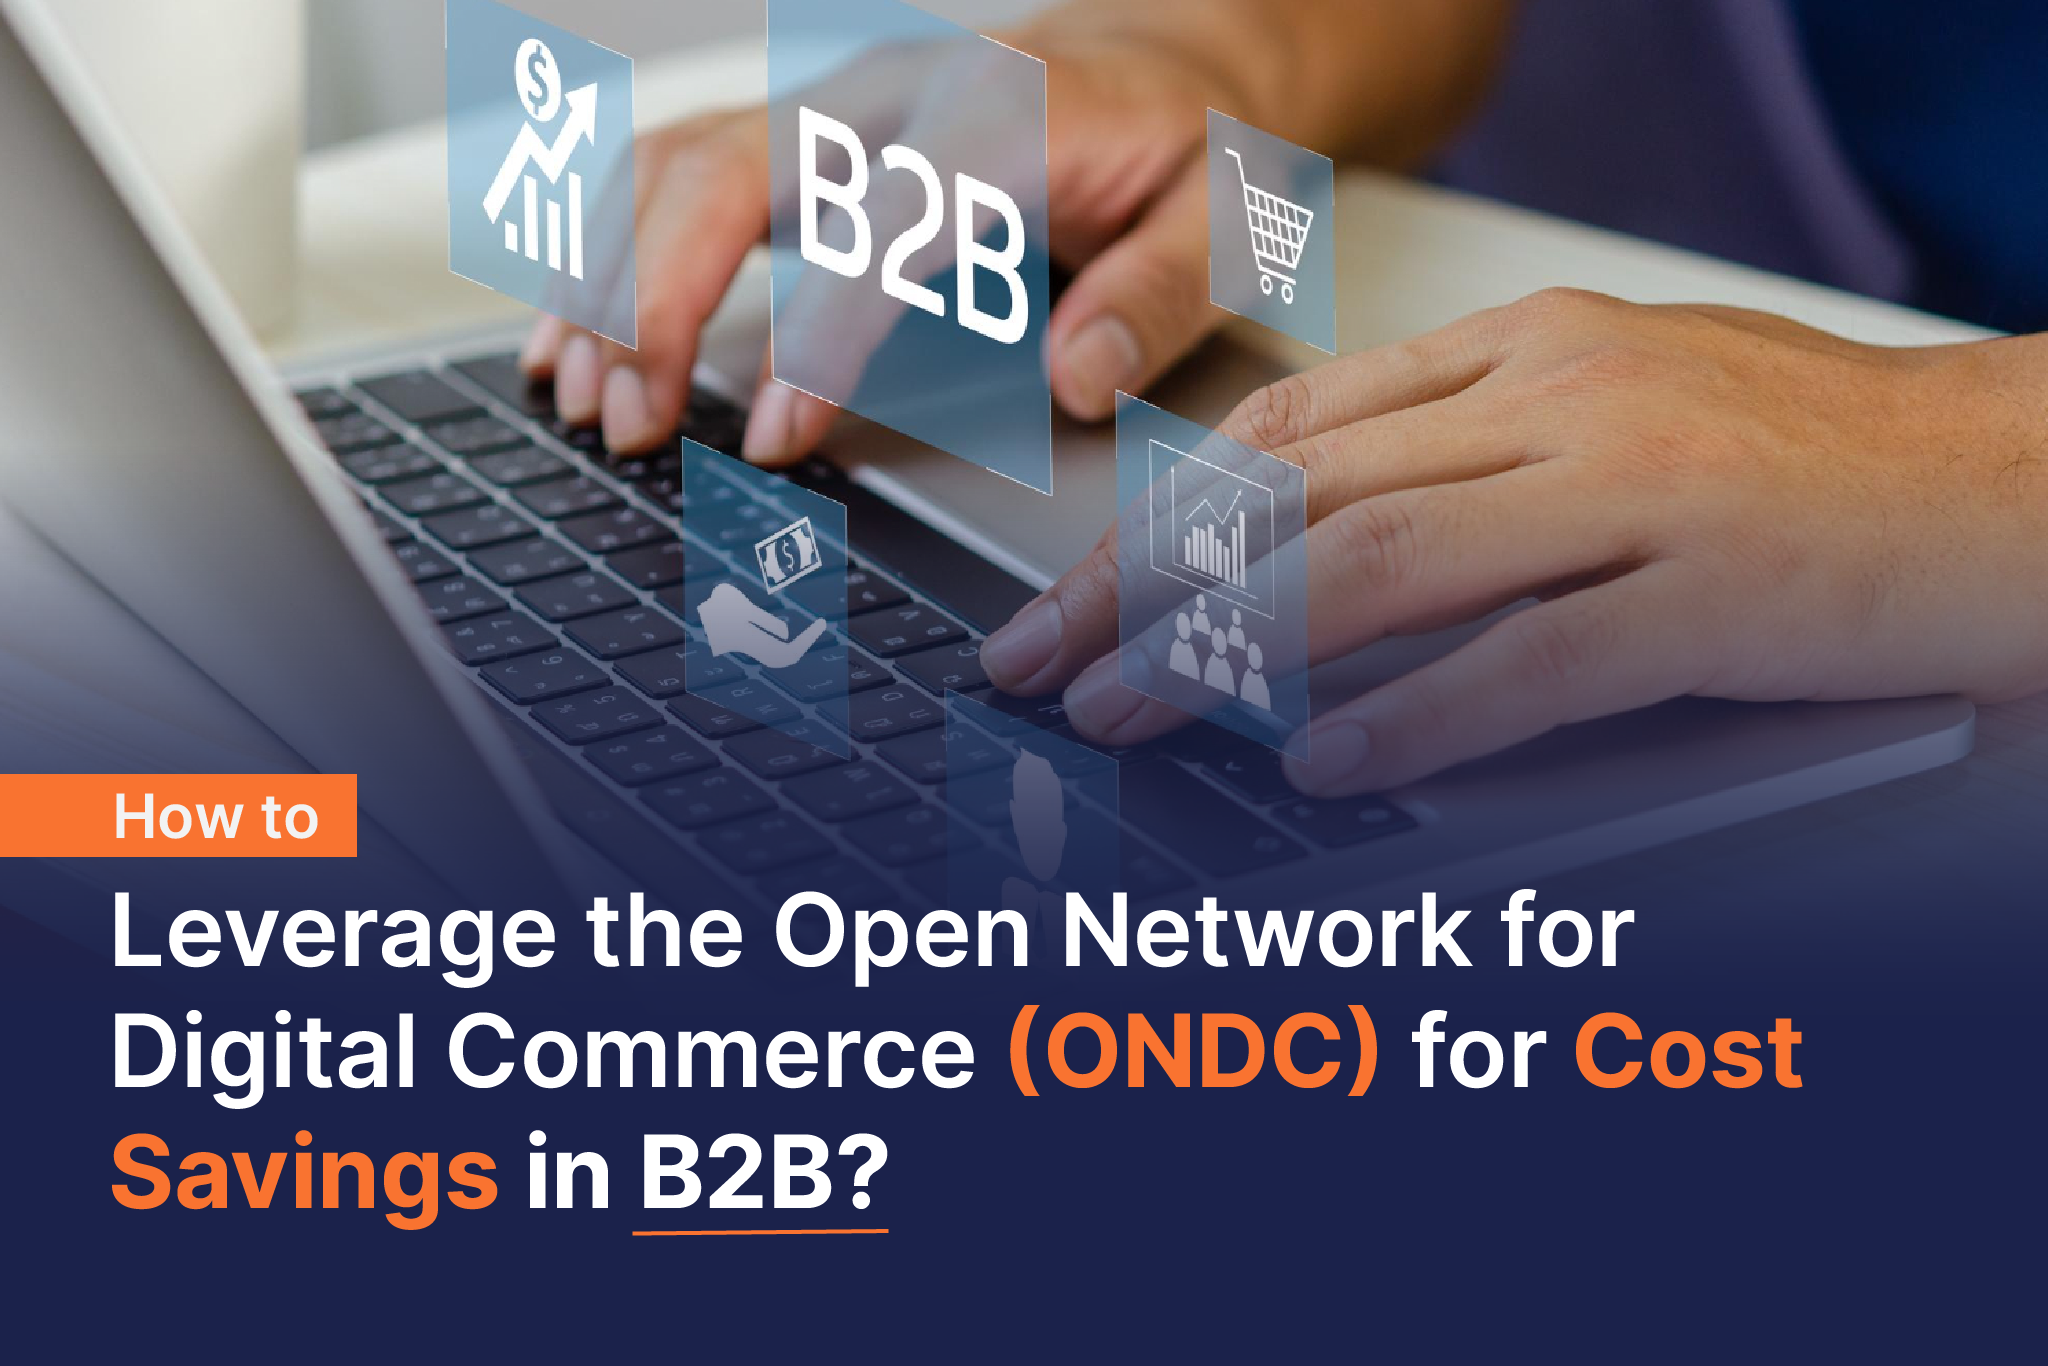 Digital Commerce (ONDC) for Cost Savings in B2B